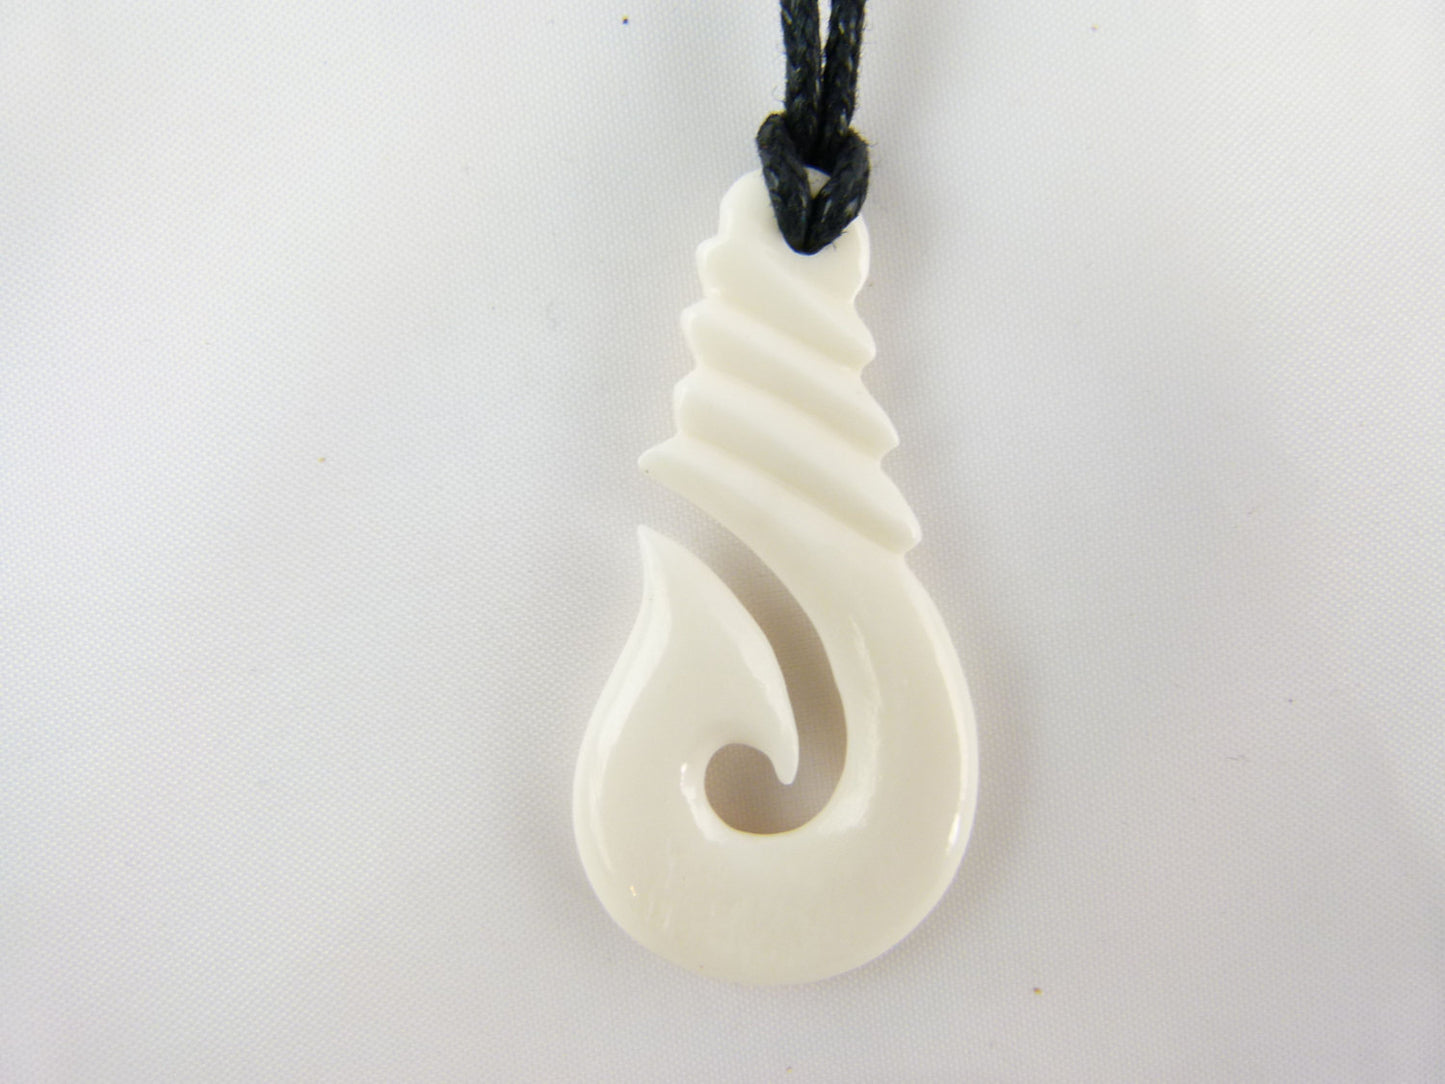 Bone Maori Hook Necklace - X022